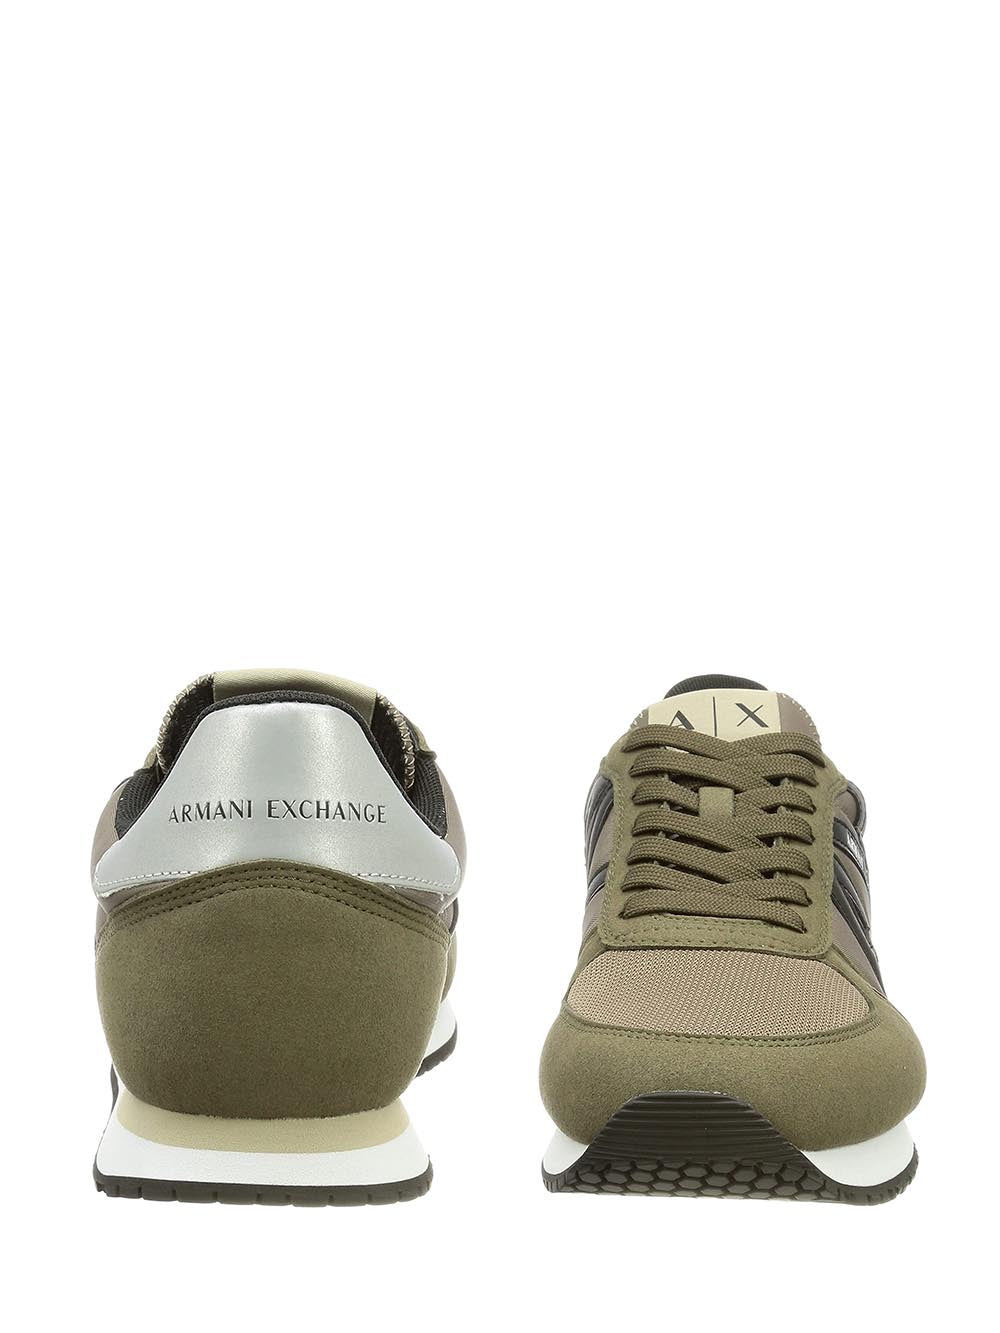 ARMANI EXCHANGE Sneakers Uomo Marrone/Tortora